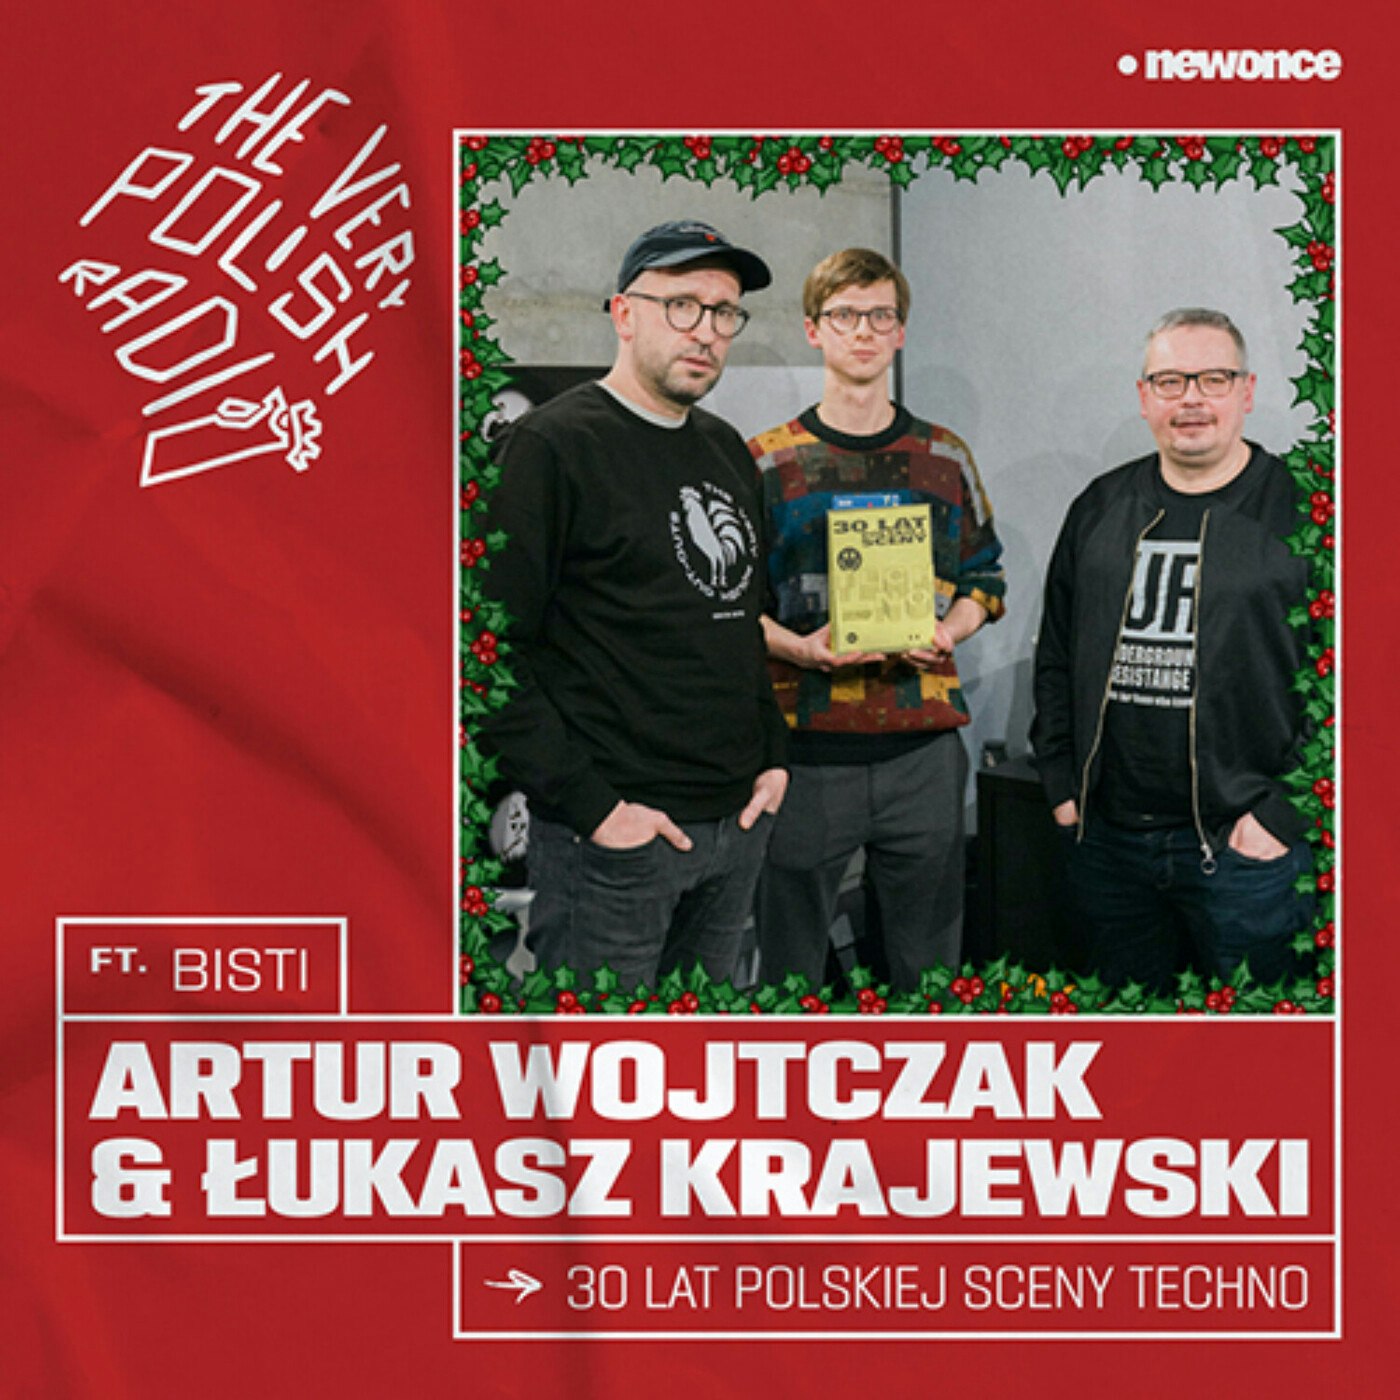 The Very Polish Radio